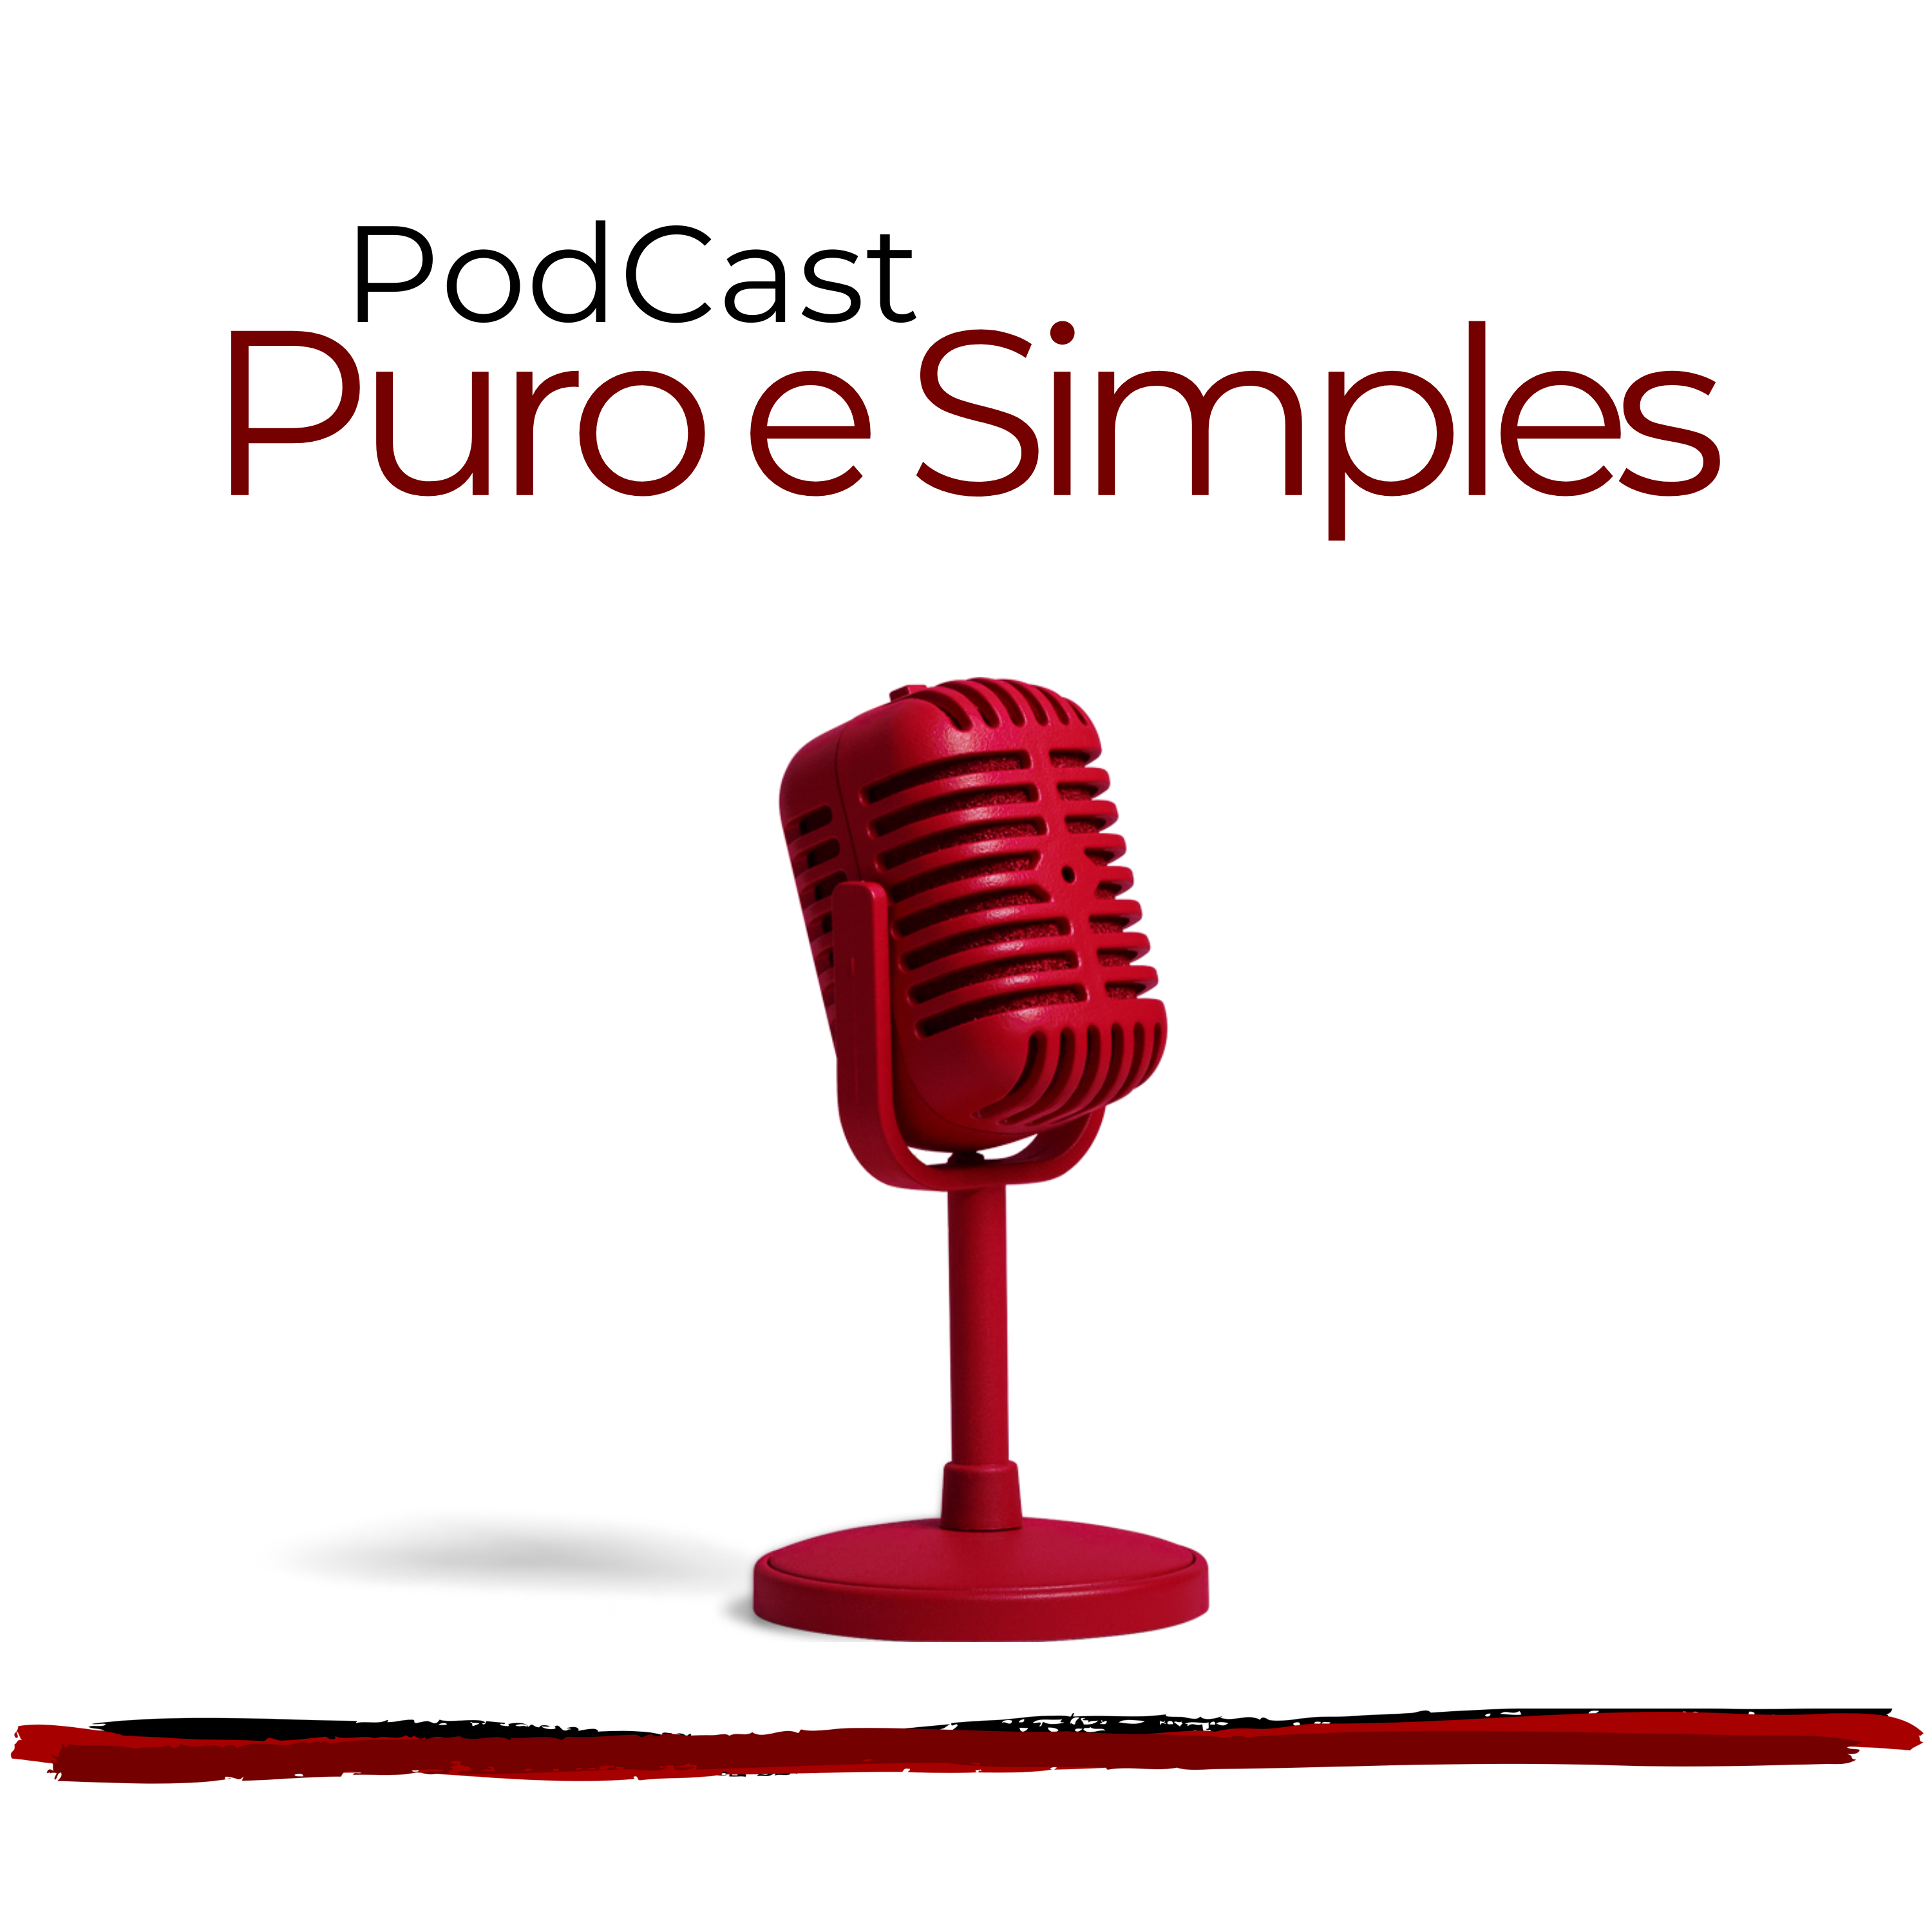 Podcast Puro e Simples